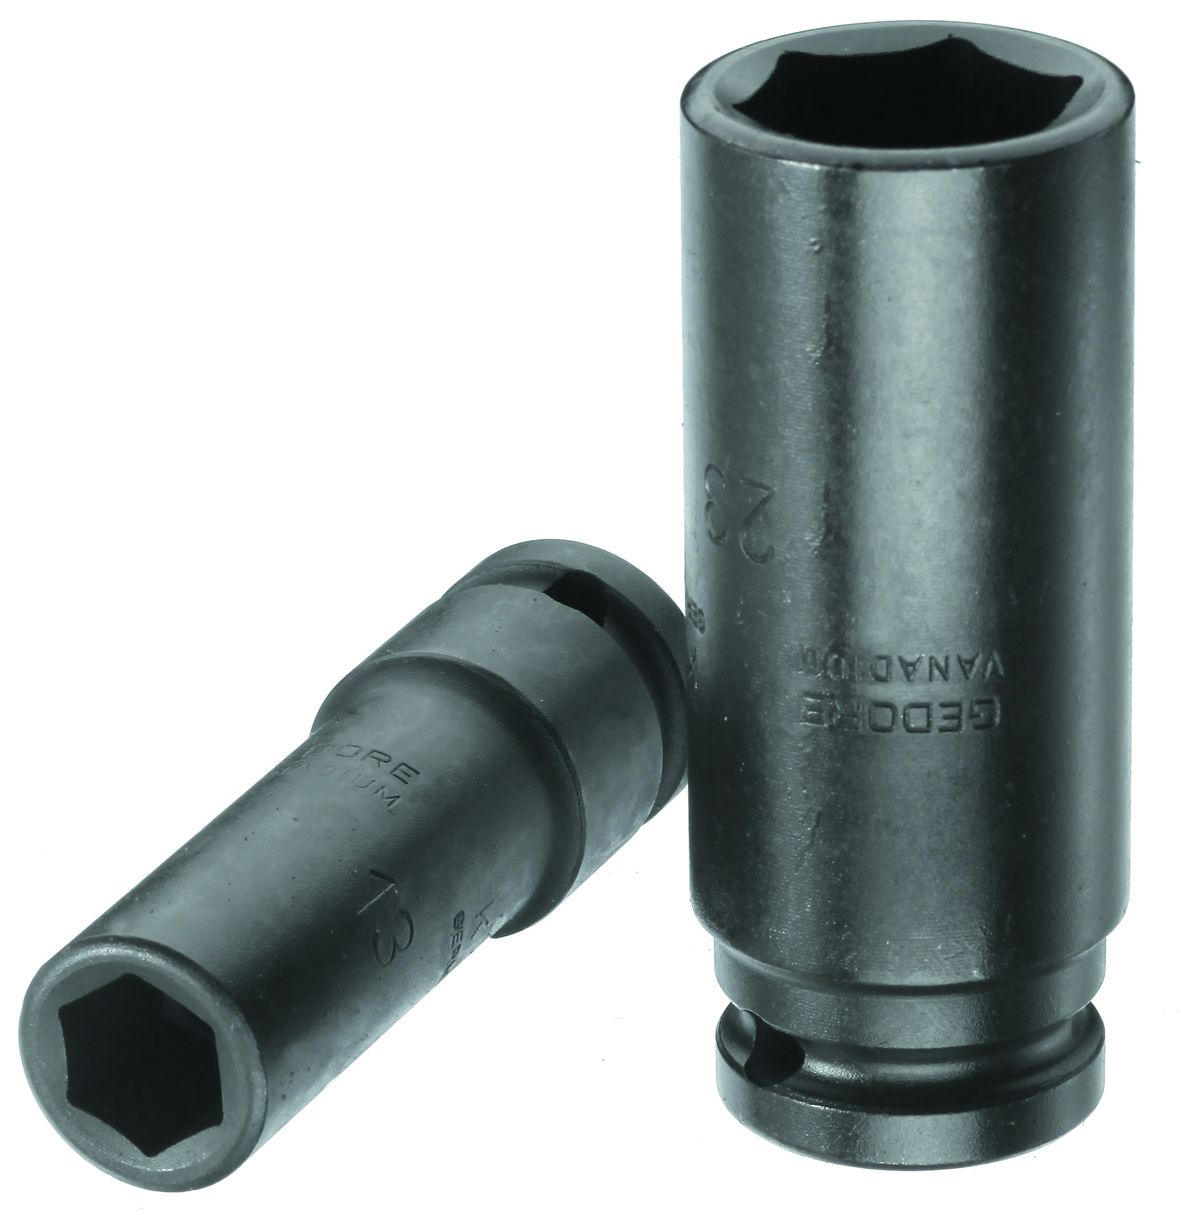 GEDORE K 19 L 27 - Long Impact Socket 1/2" 27 mm (6164780)